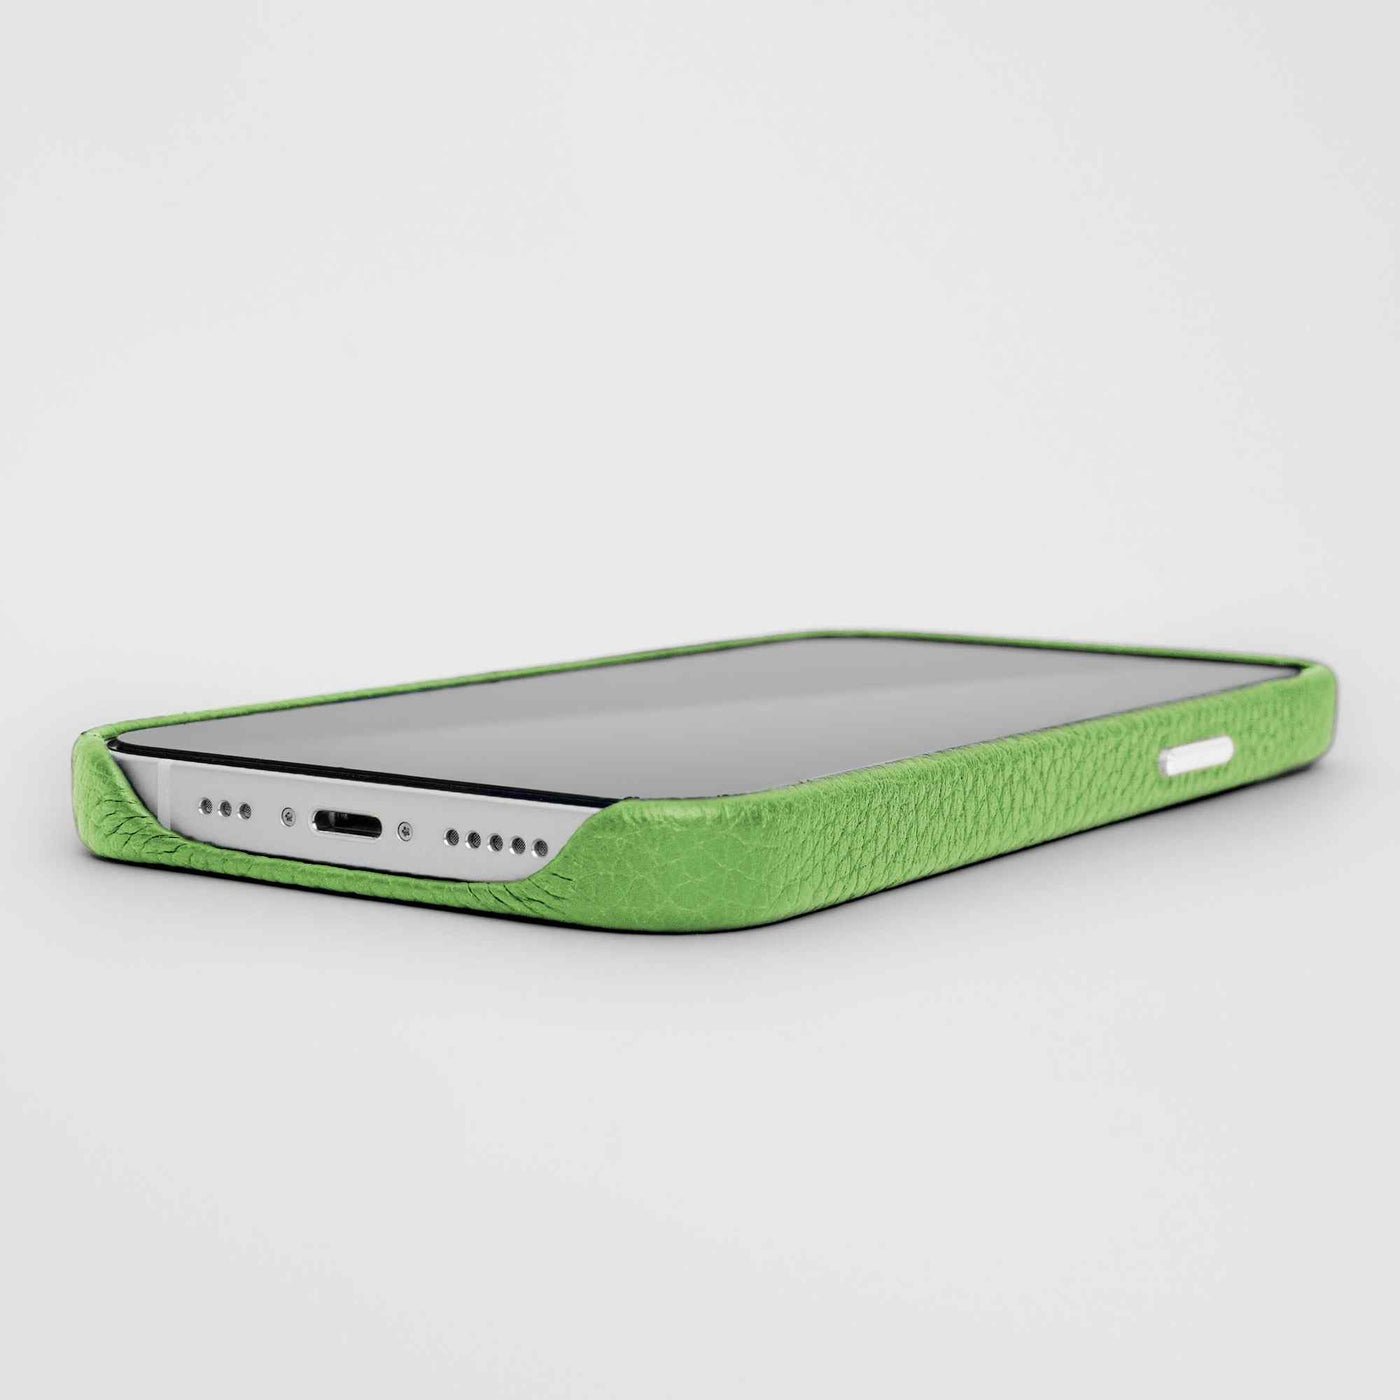 Grain Embossed Leather iPhone 12 Pro Max Case in Seafoam #color_seafoam